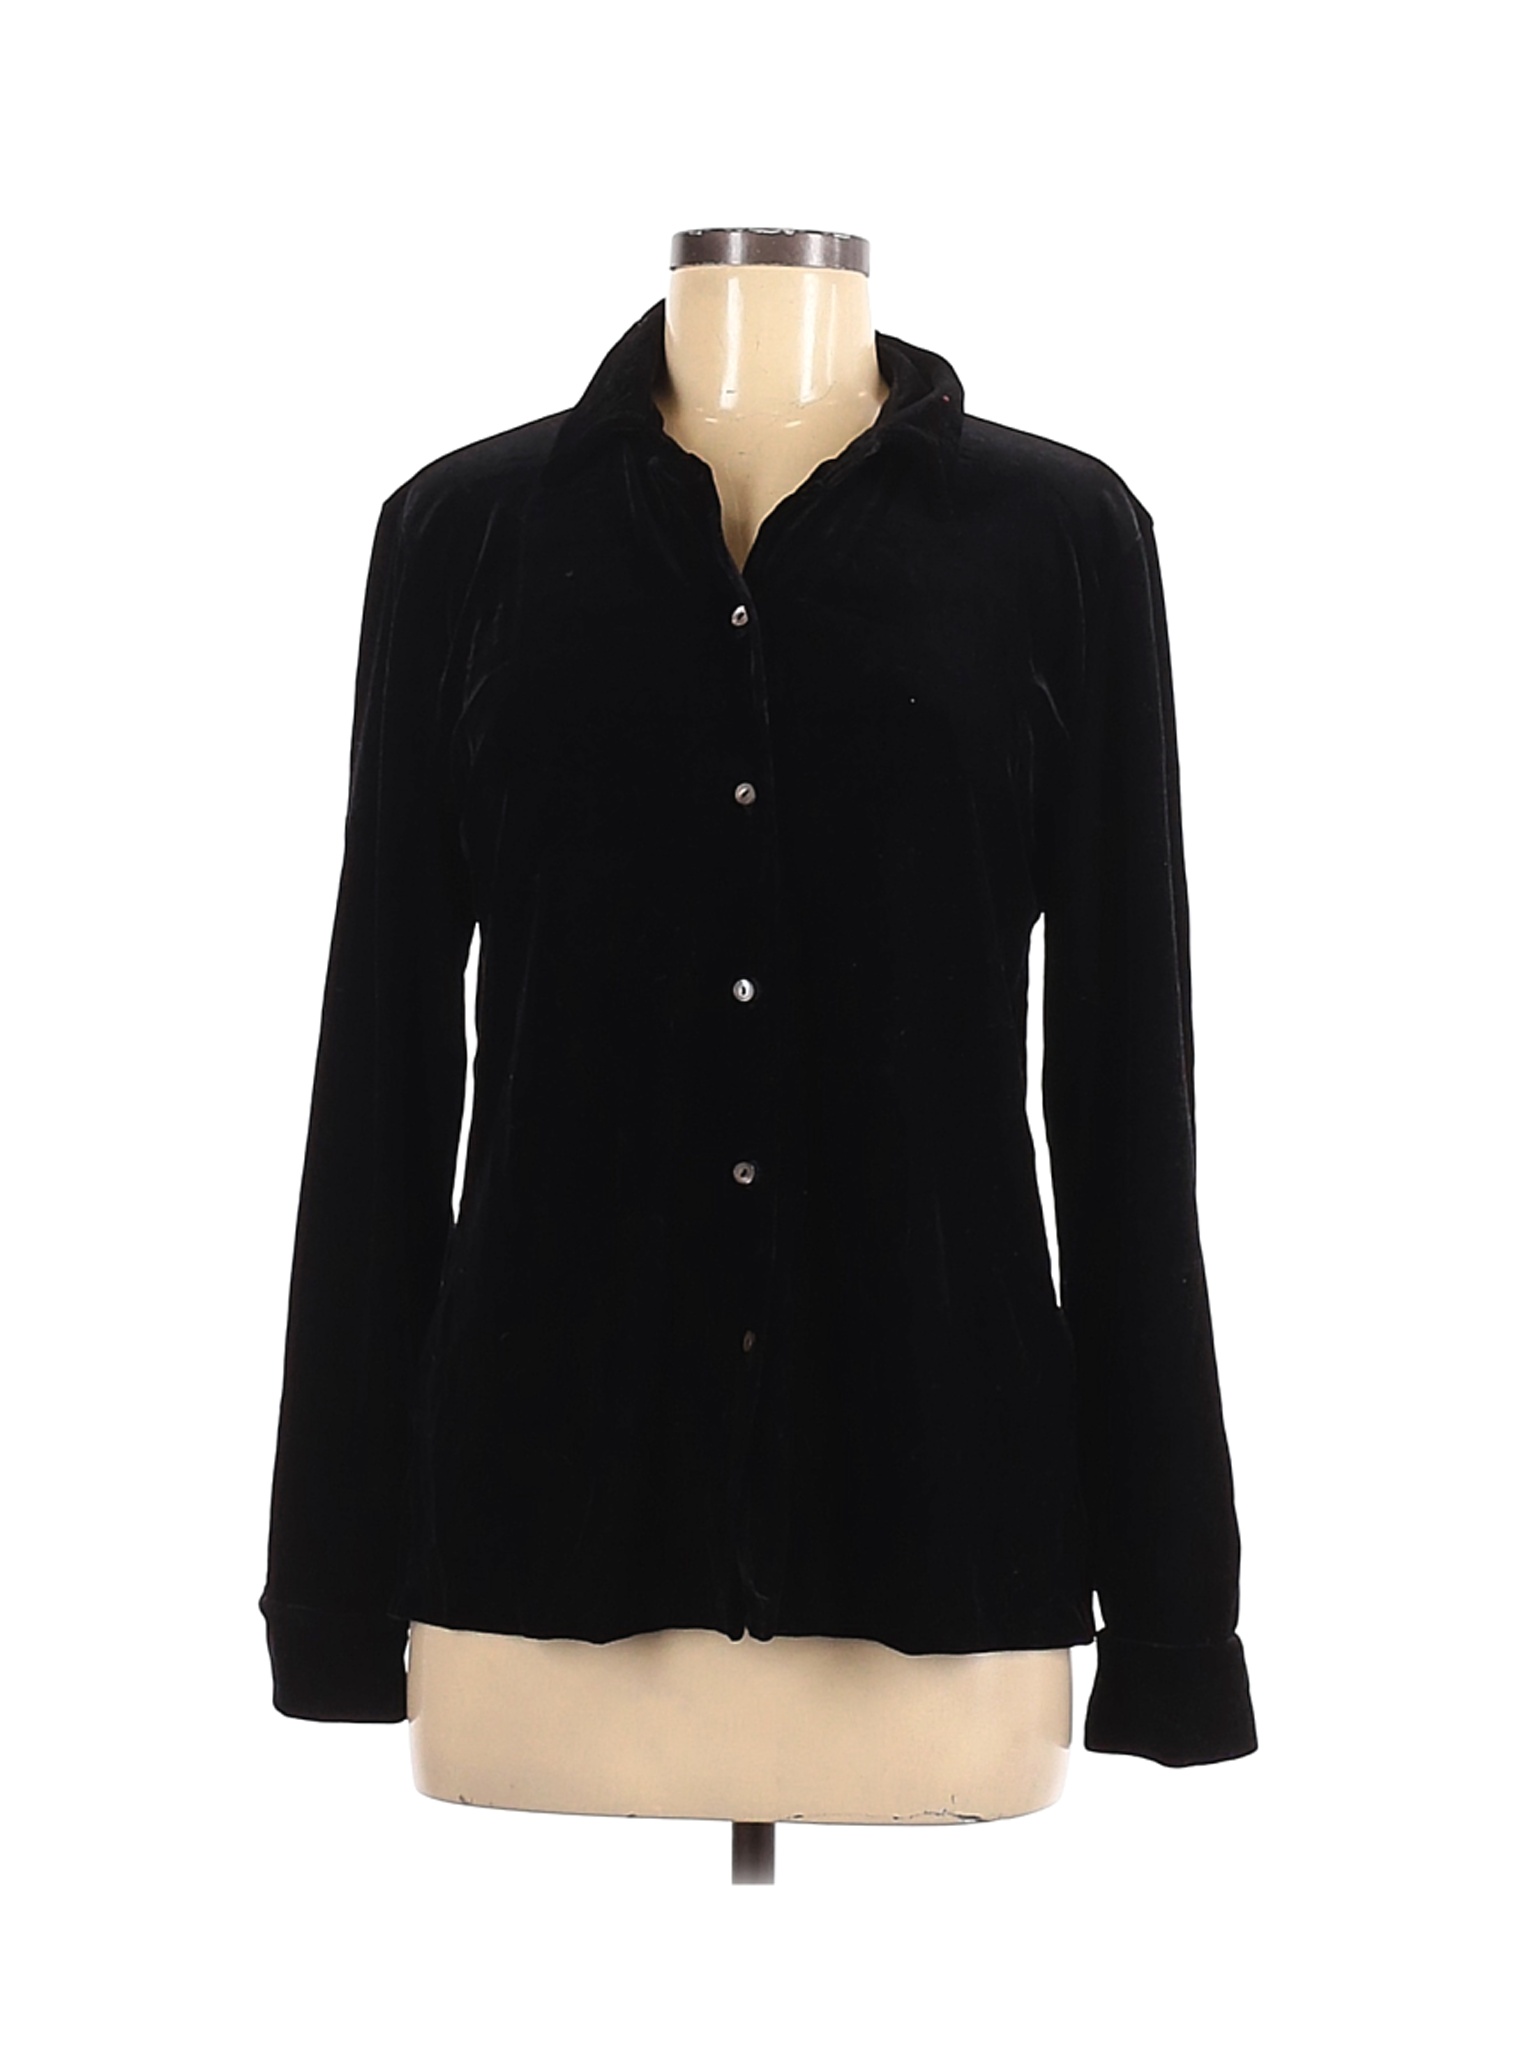 Anne Klein Women Black Long Sleeve Blouse M | eBay